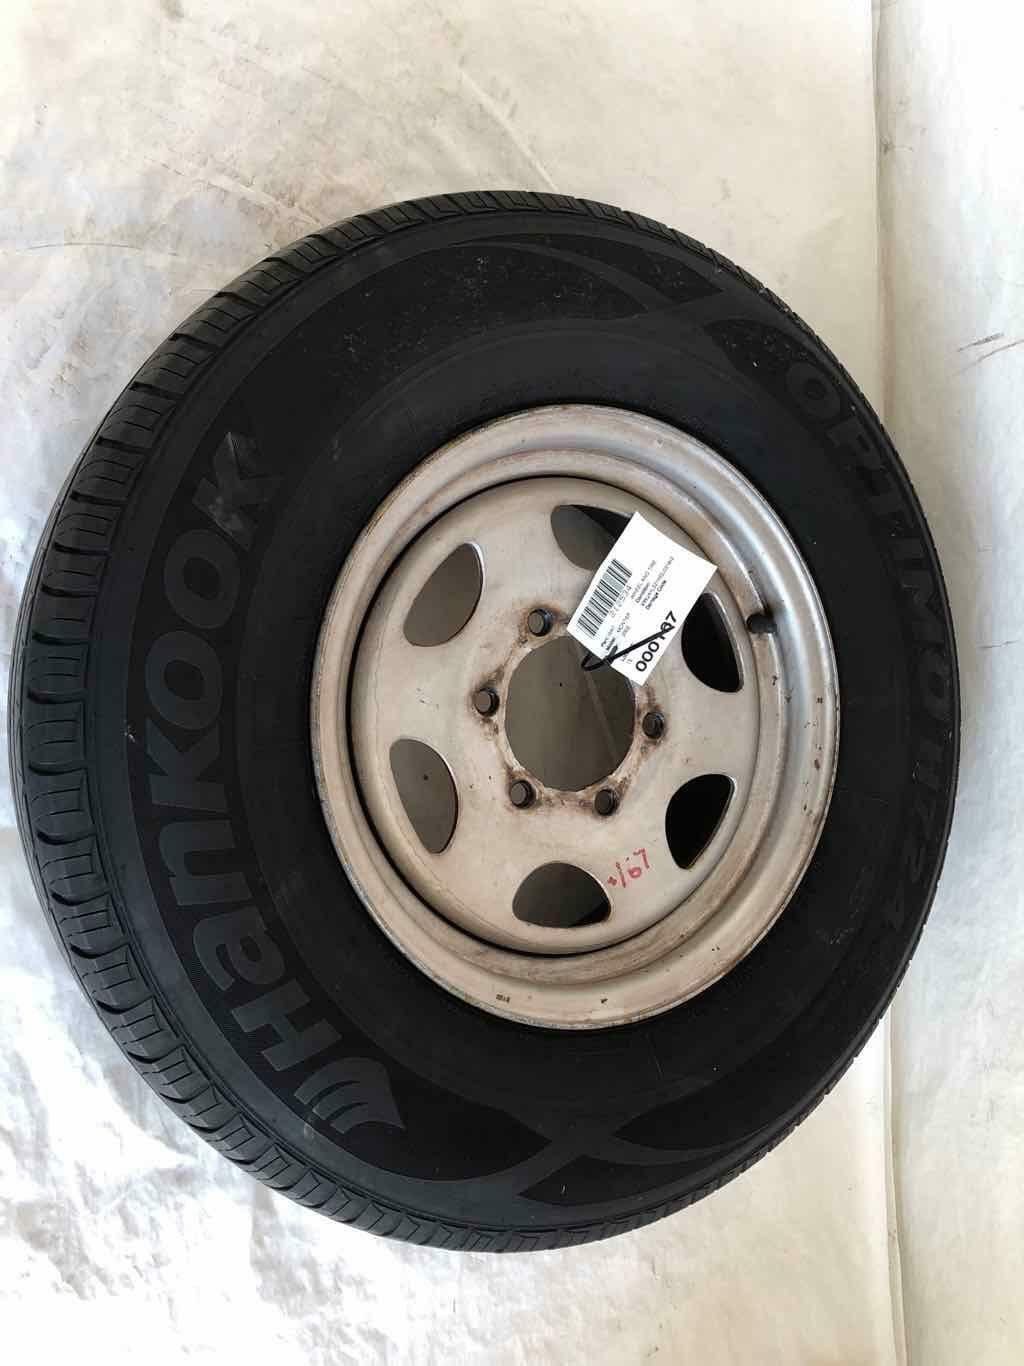 2002 MITSUBISHI MONTERO SPORT Emergency Spare Wheel Rim & Tire P235/75R15 OEM